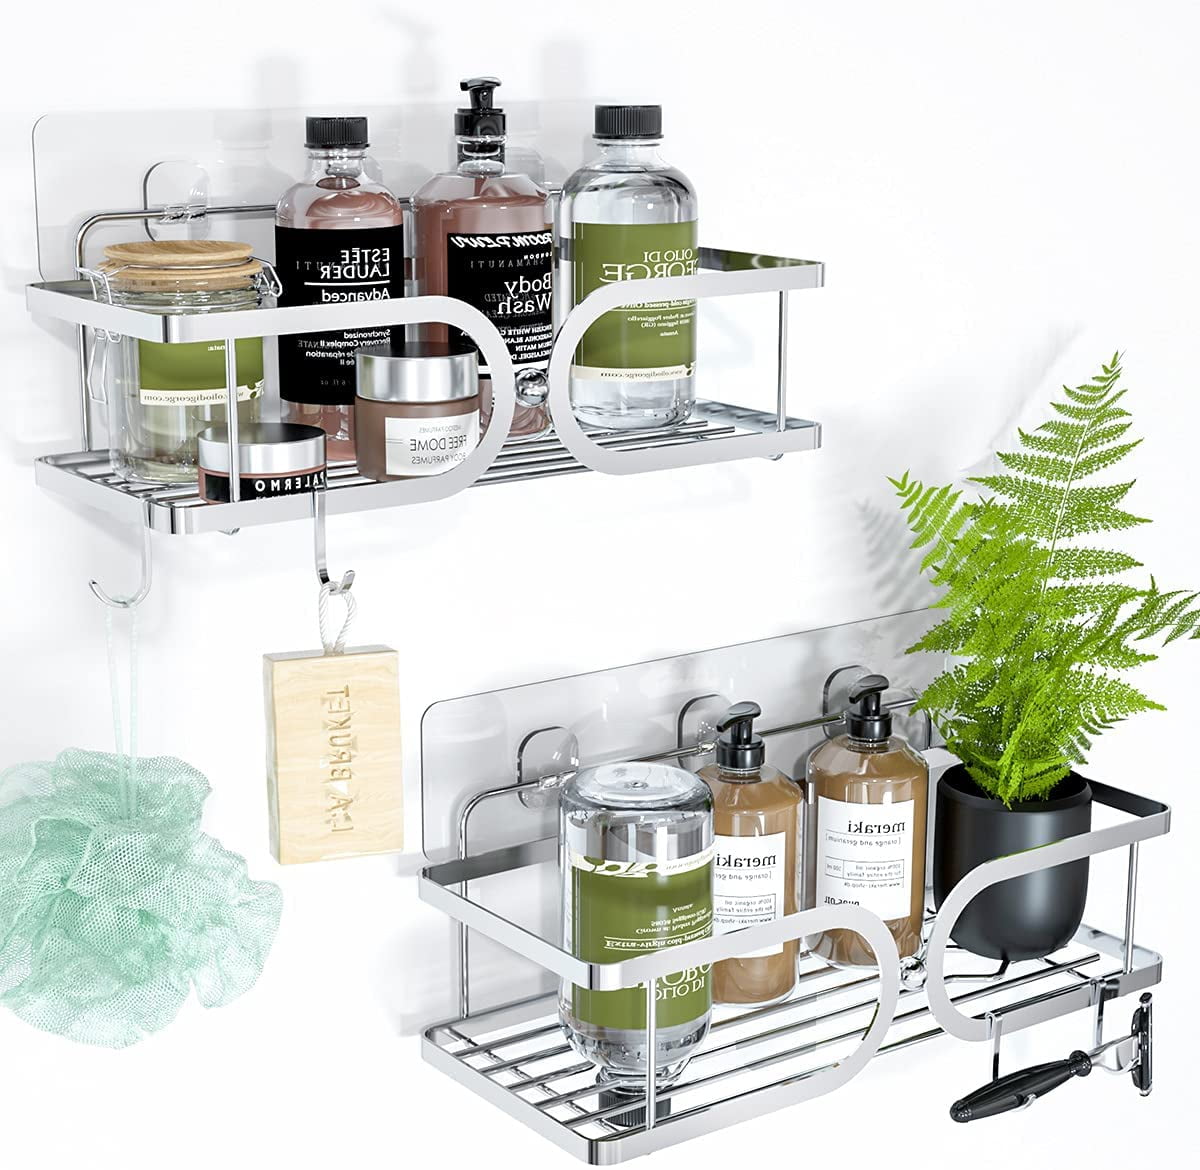 Dyiom Corner Shower Caddy with Shampoo Holder, 2-Pack Shower Organizer Shower Storage Shelf with 11 Hooks in Silver